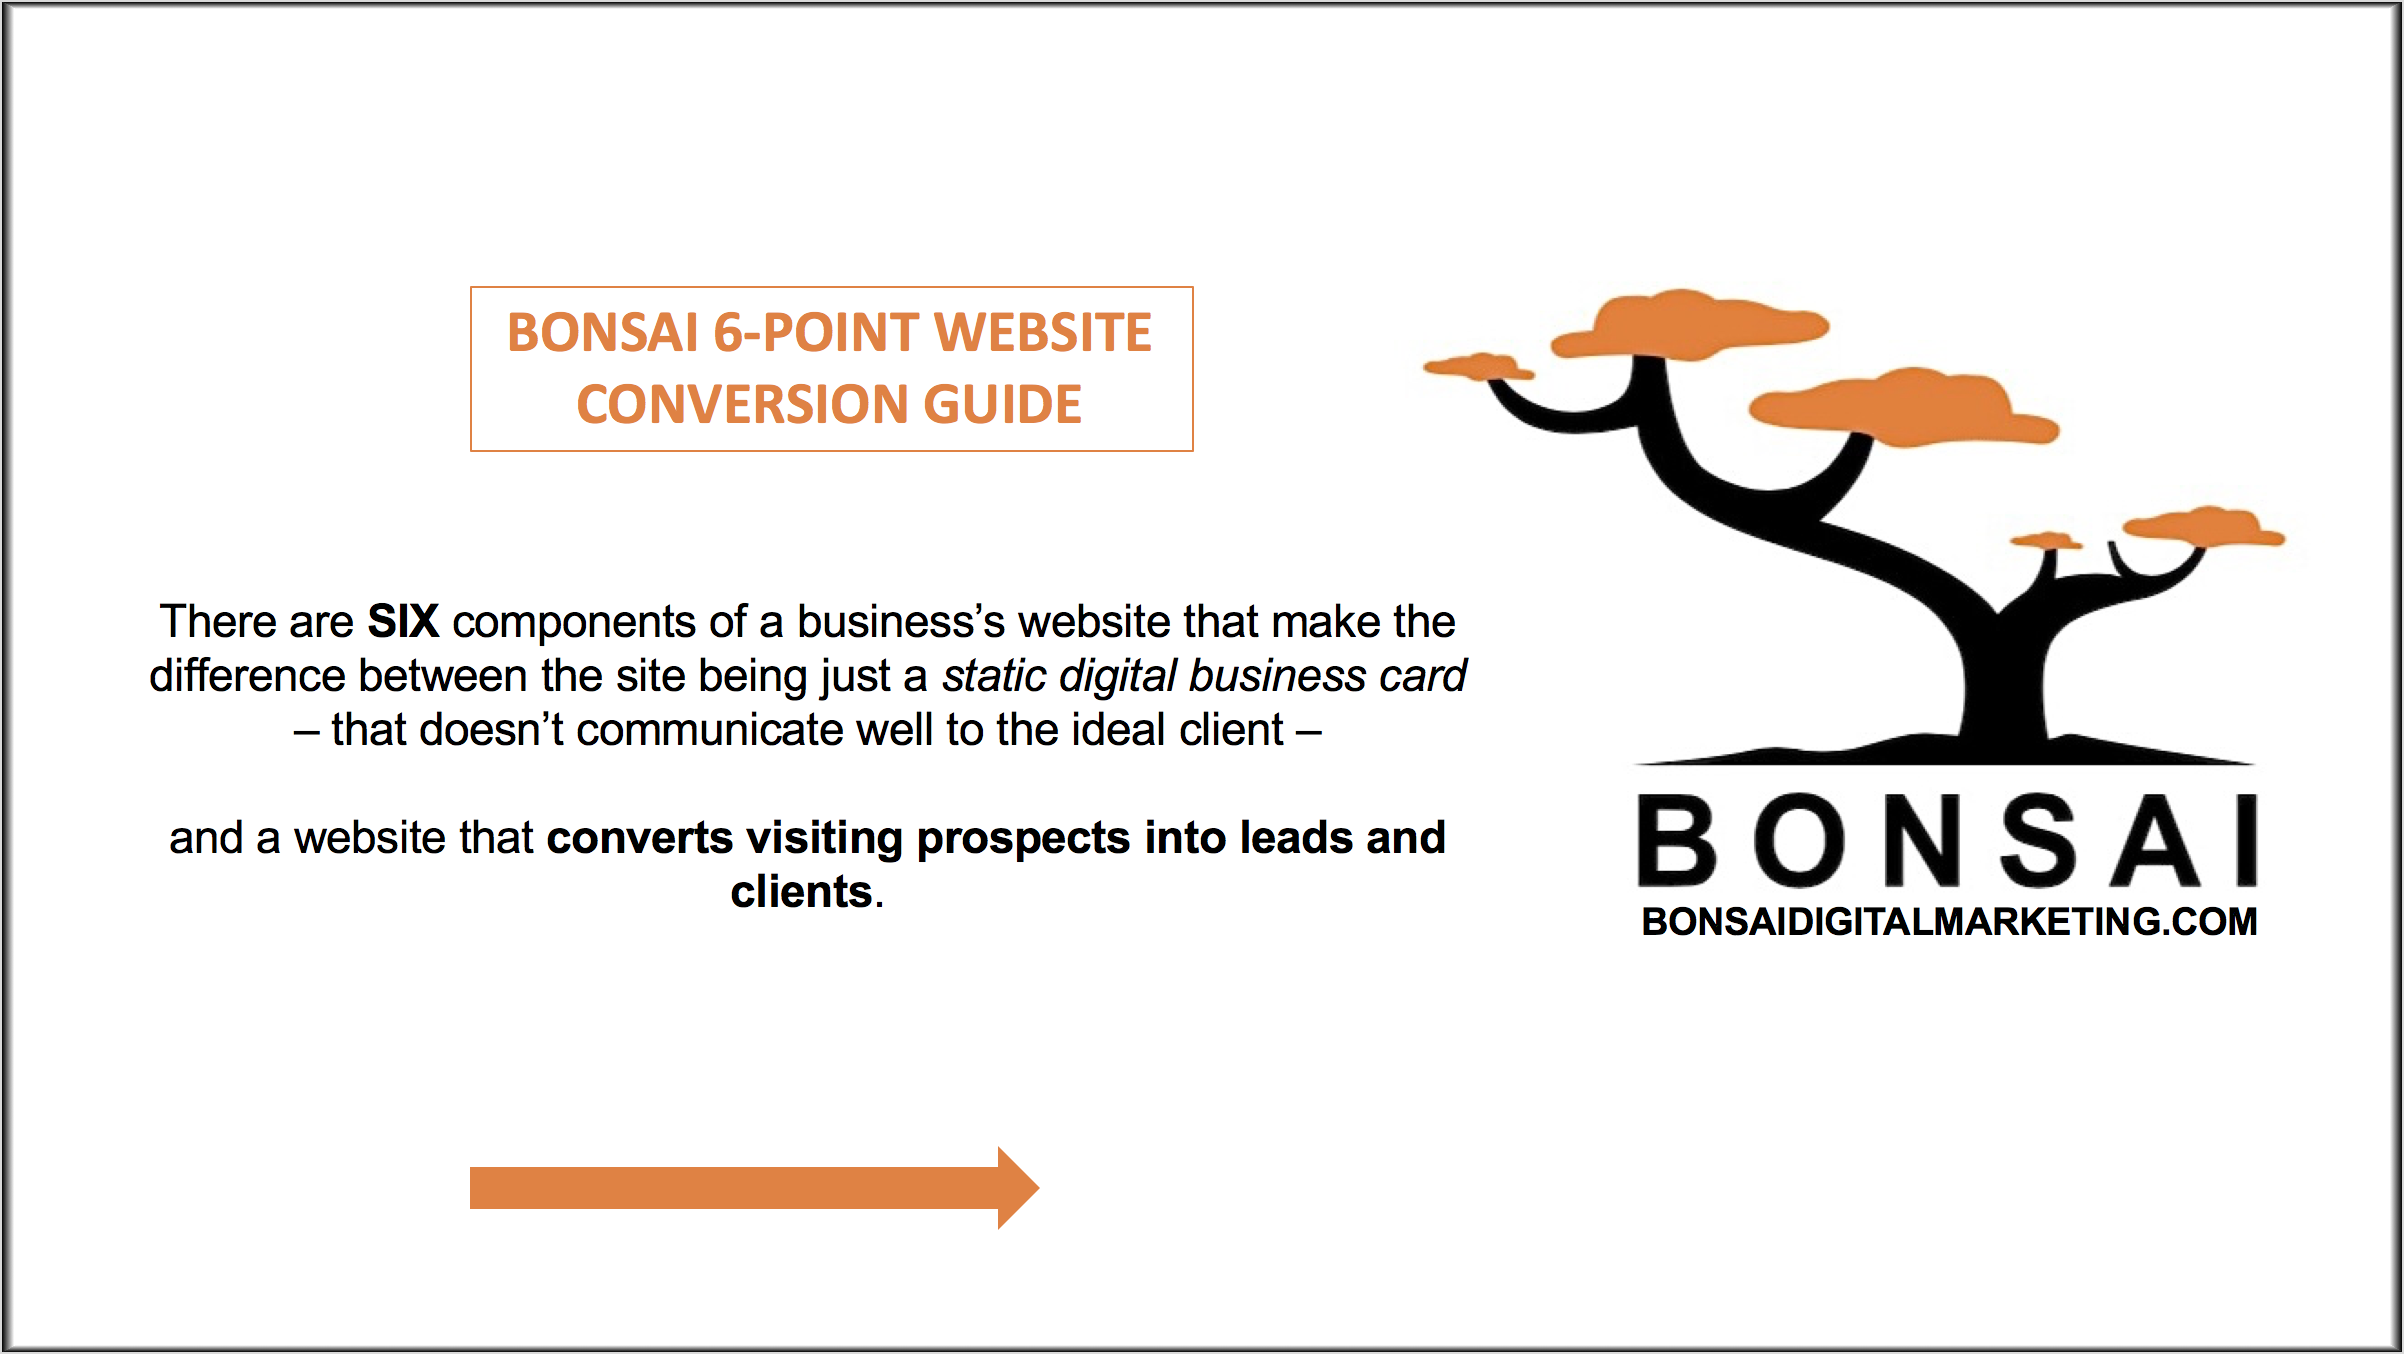 Bonsai 6-Point Website Conversion Guide